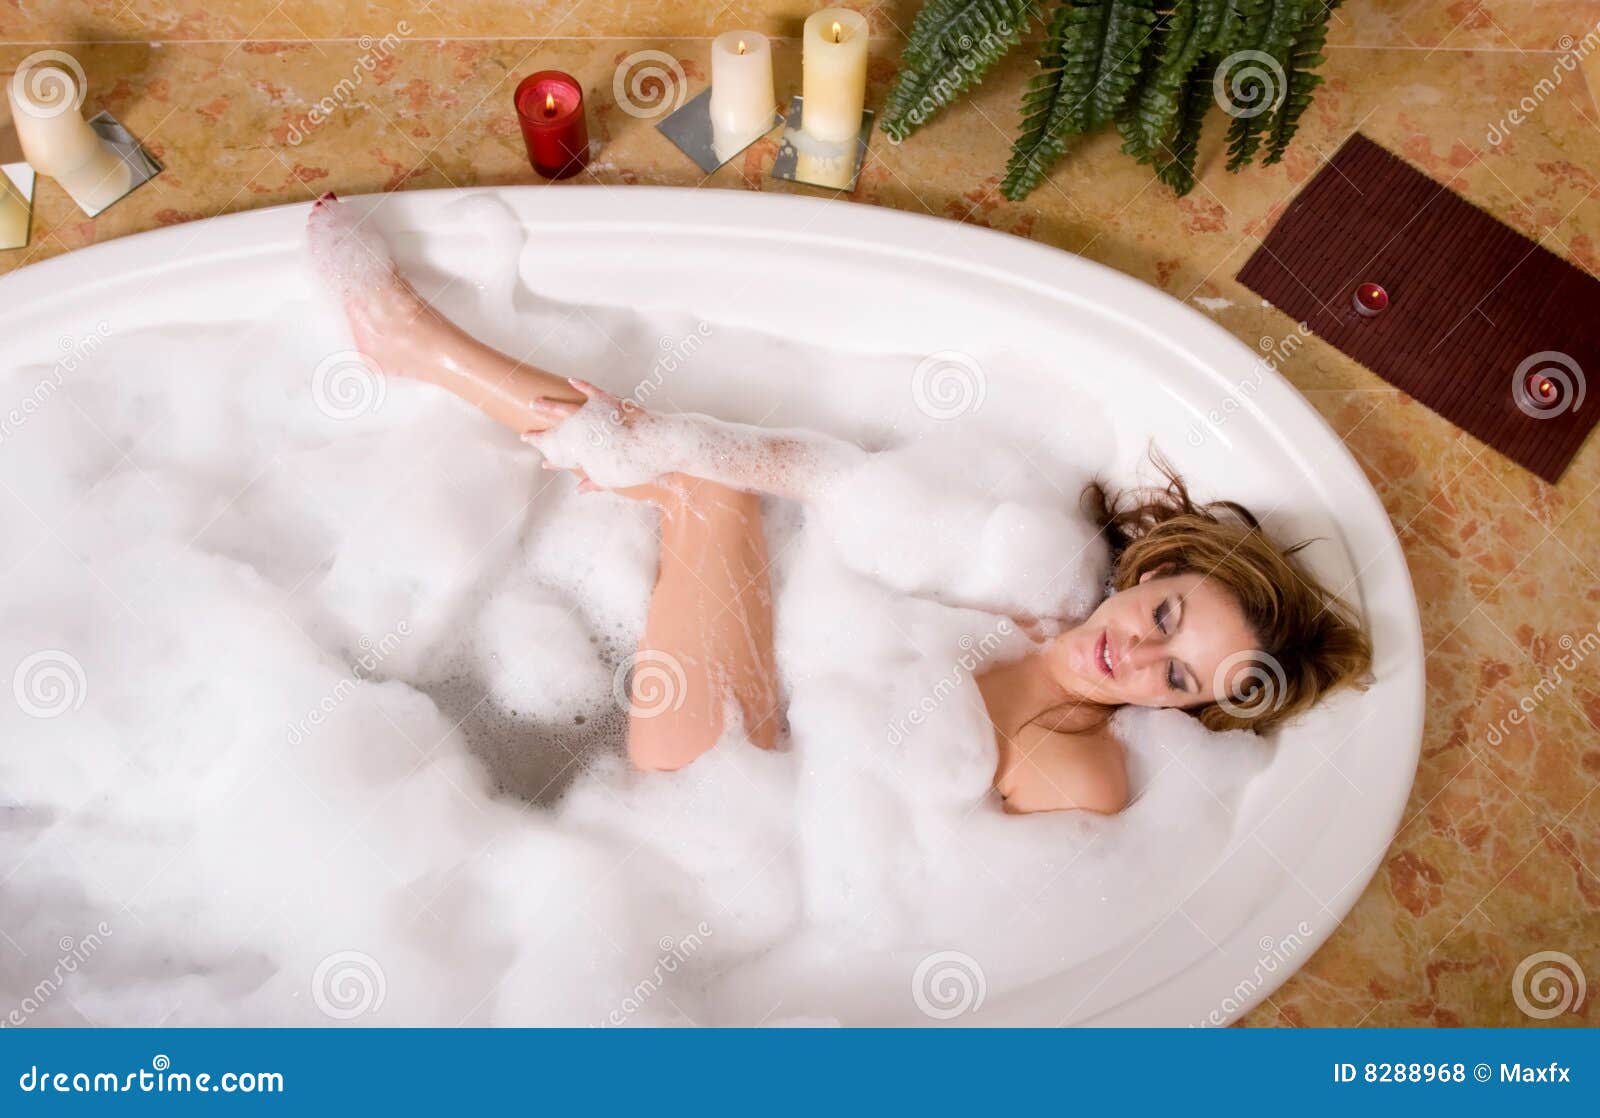 Naked women bubble bath - bare photograph